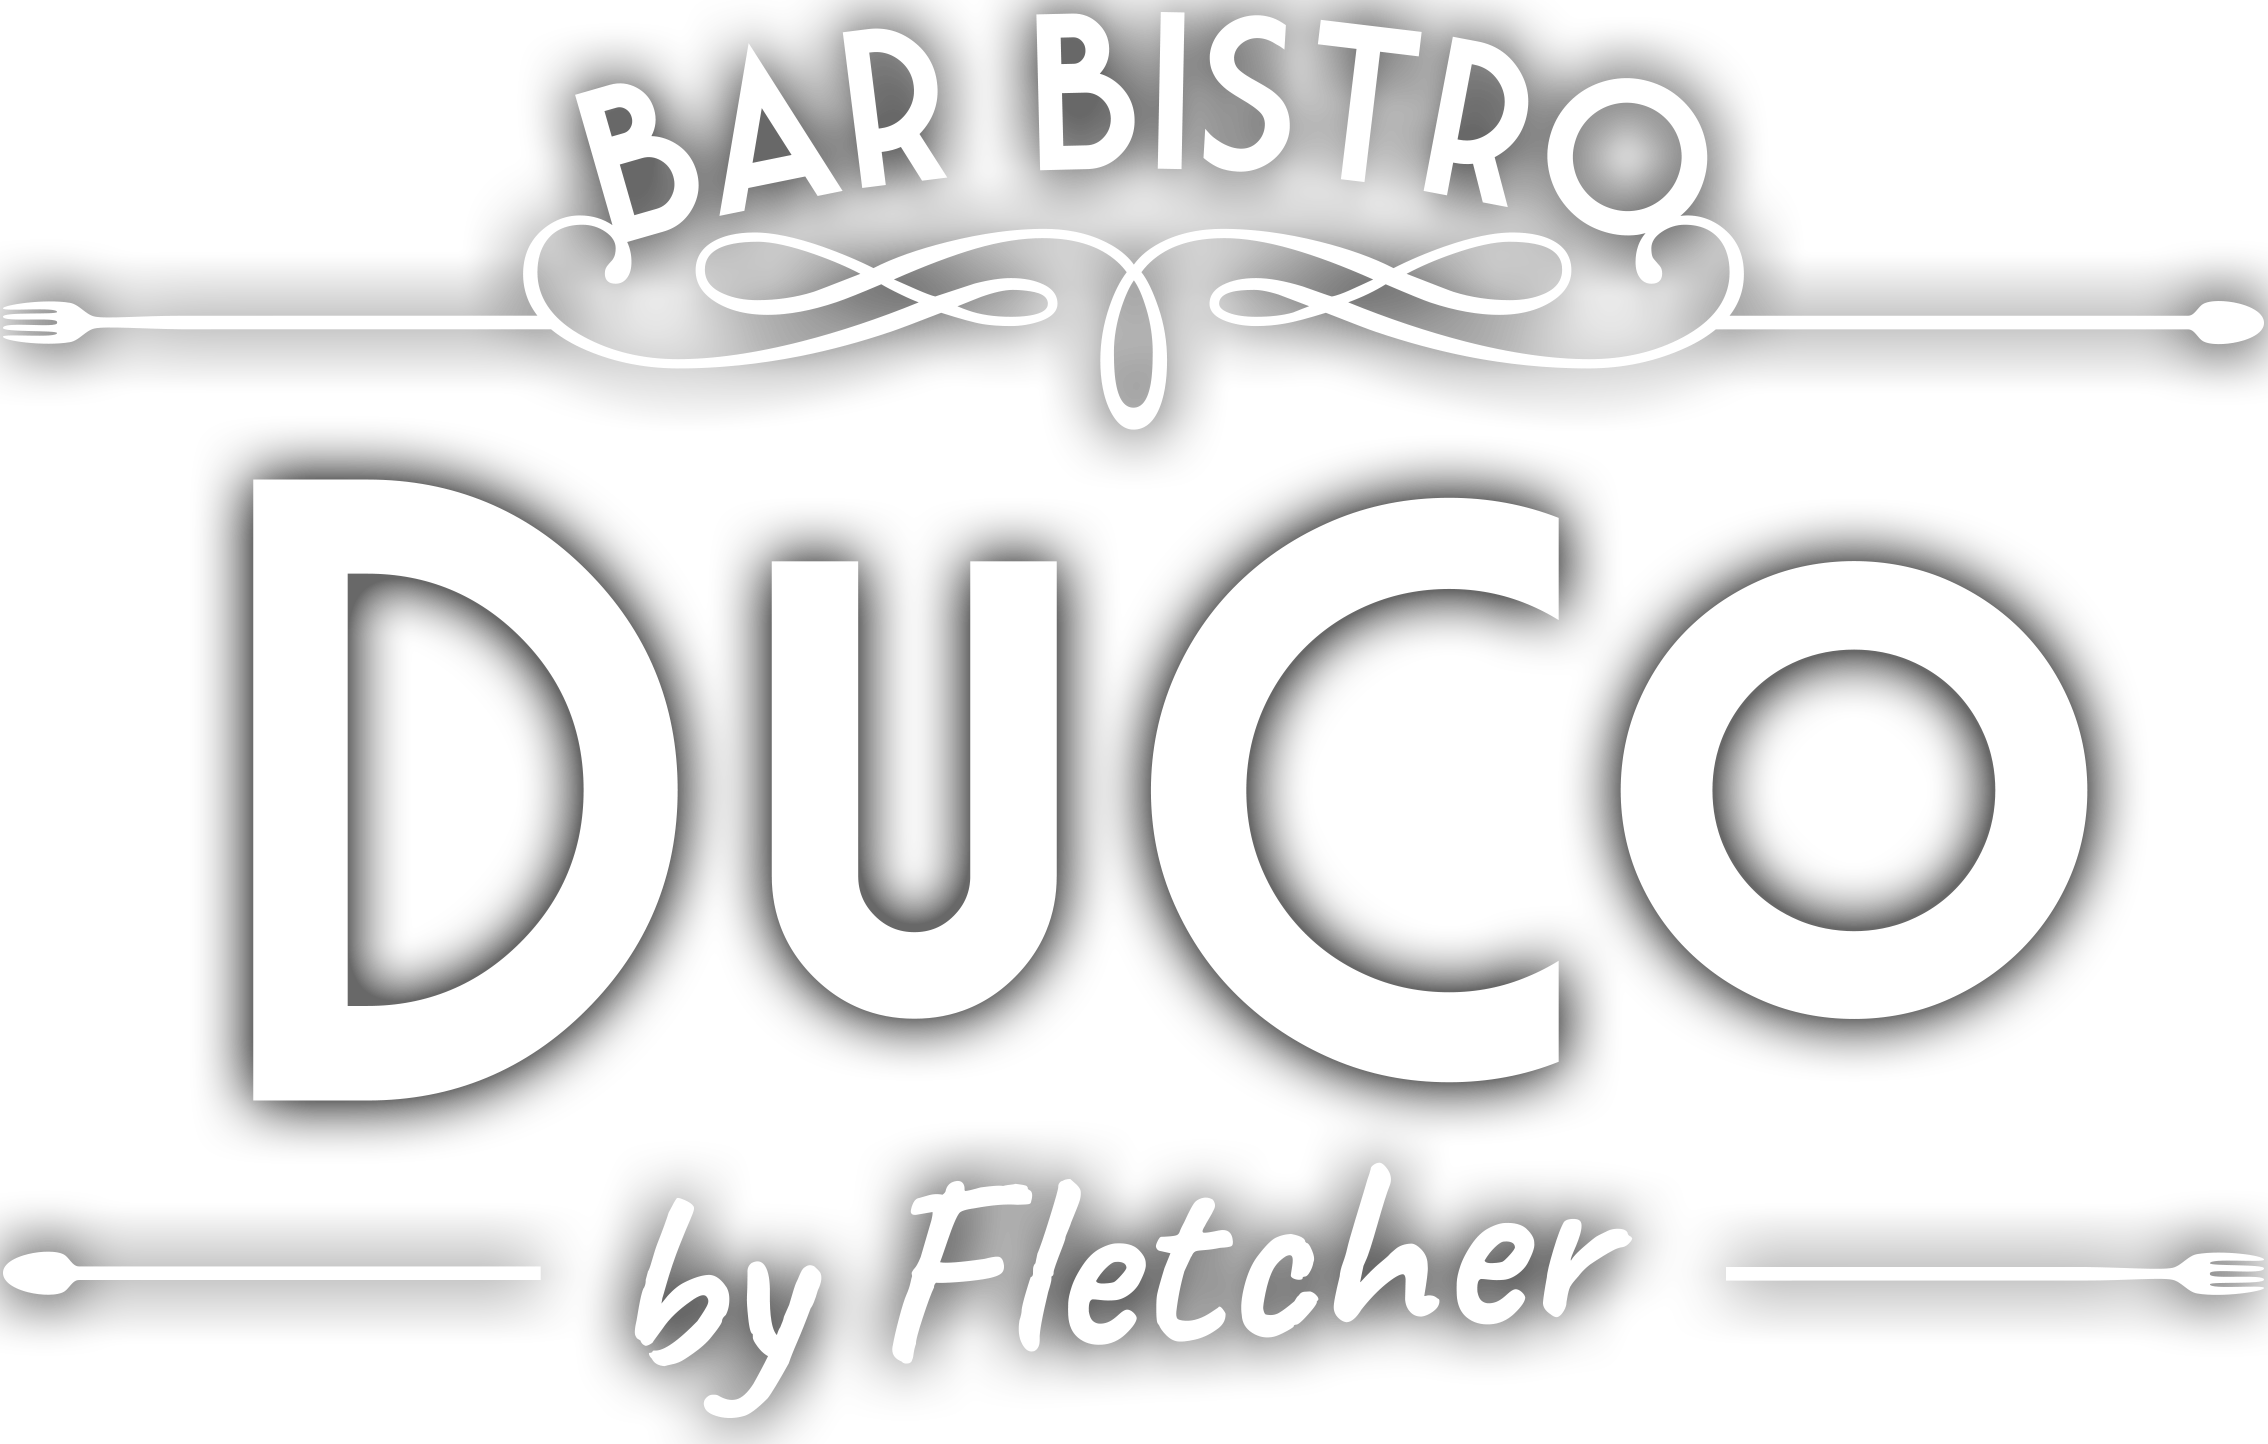 Bar Bistro Duco by Fletcher logo